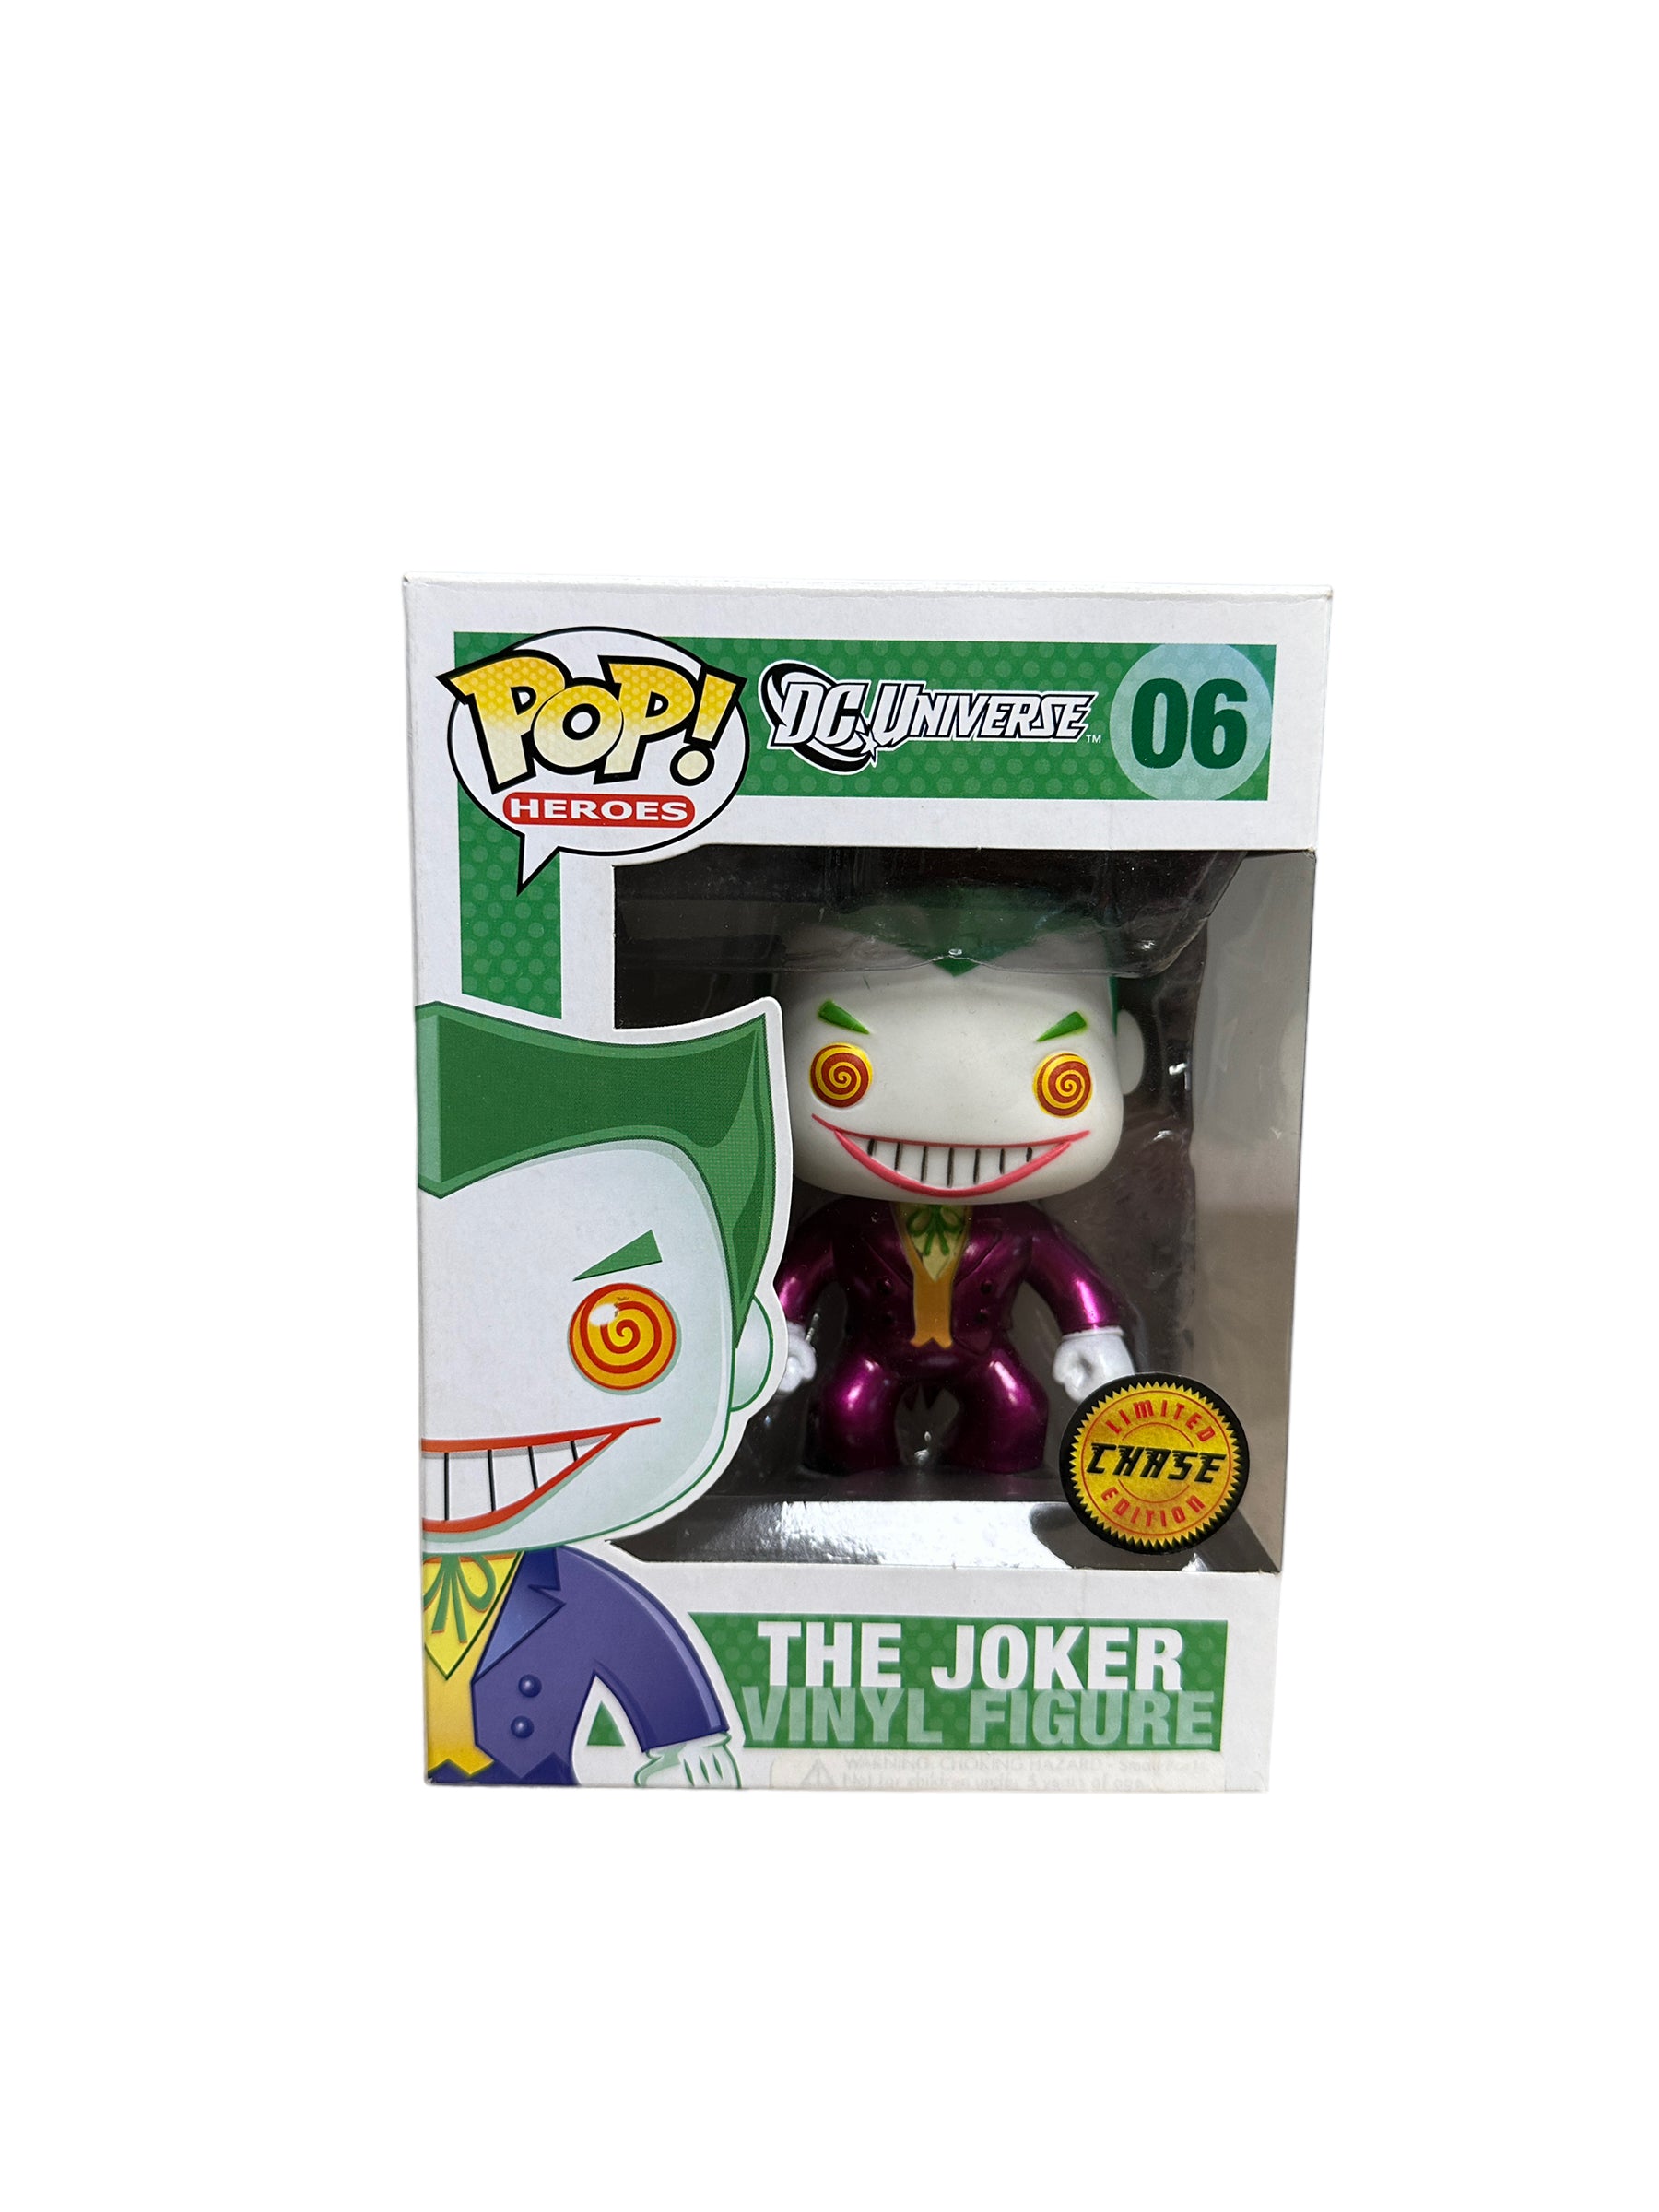 The Joker #06 (Metallic Chase) Funko Pop! - DC Universe - 2014 Pop! - Condition 8/10